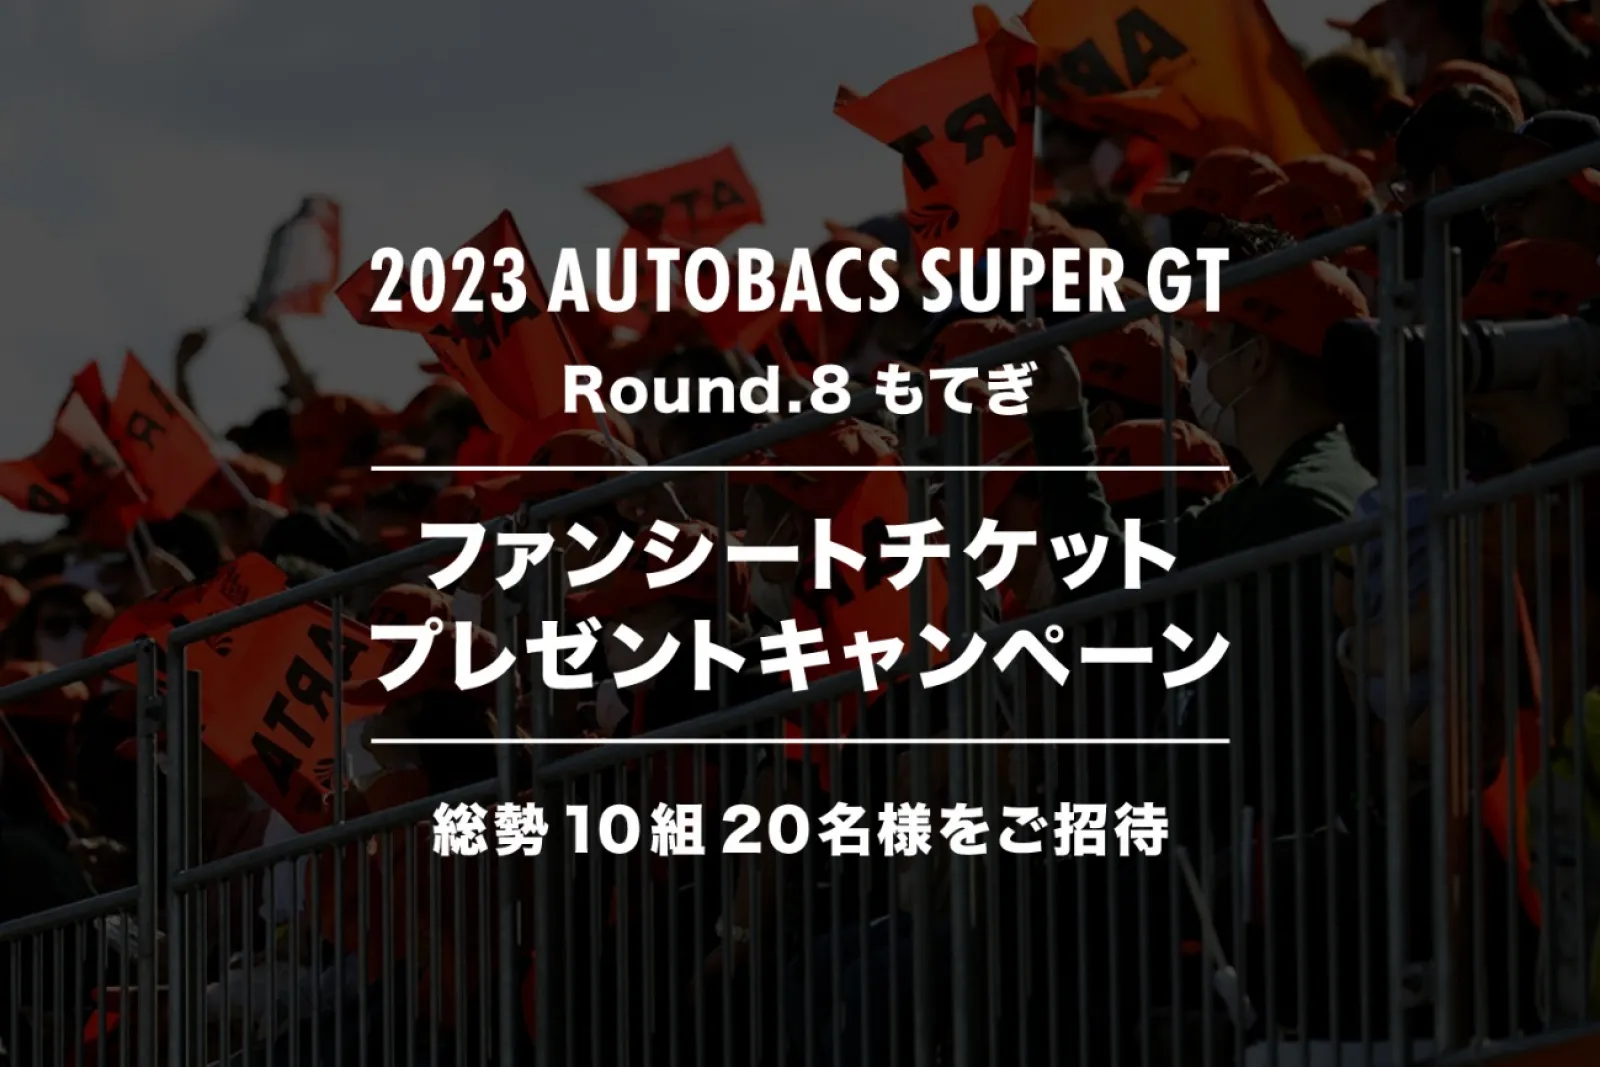 2023 AUTOBACS SUPER GT Round.8 (モビリティリゾートもてぎ) ファン ...